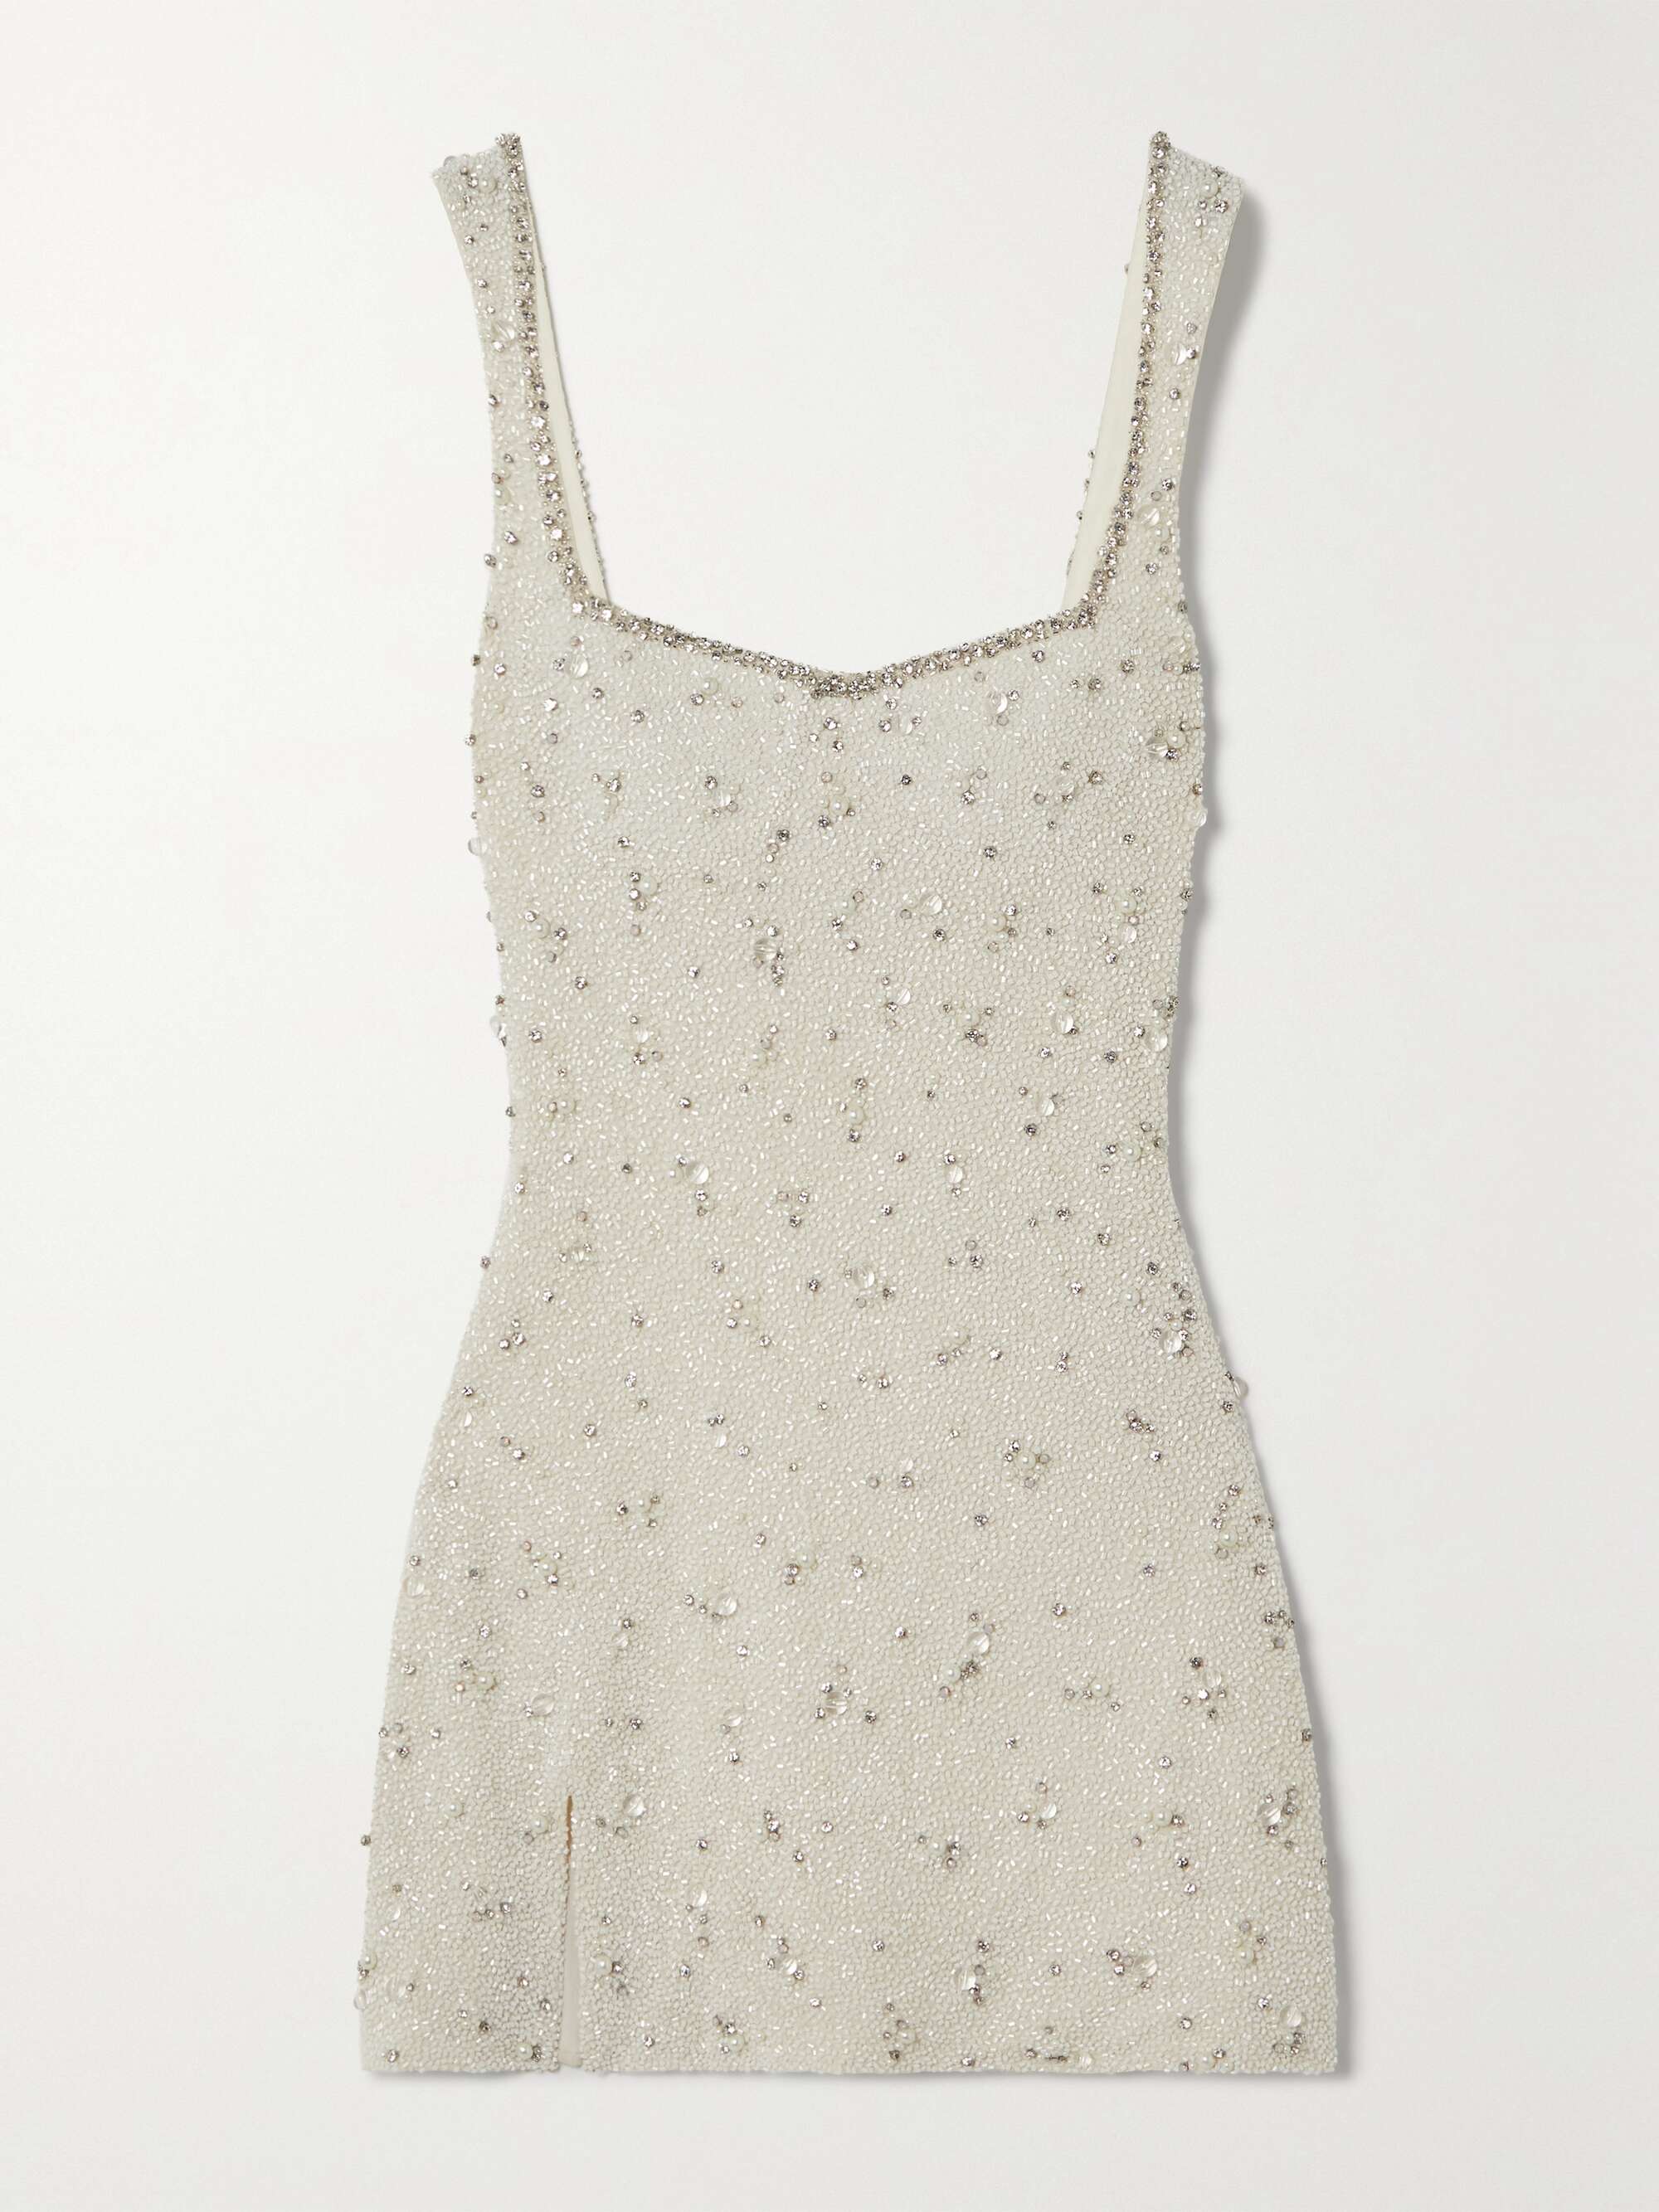 CLIO PEPPIATT, Embellished Stretch-Tulle Mini Dress